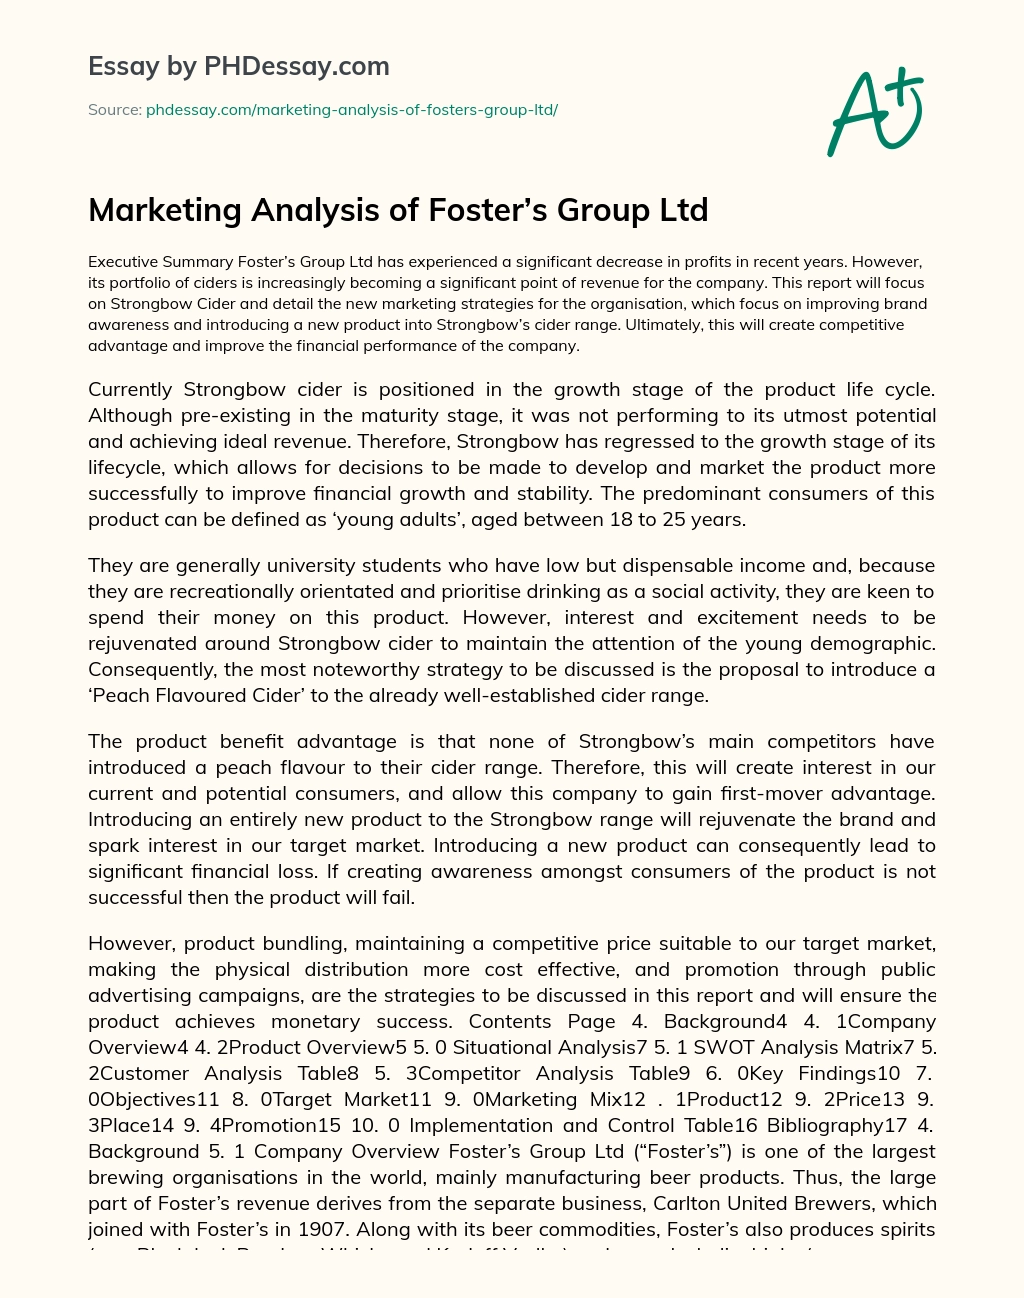 Marketing Analysis of Foster’s Group Ltd essay